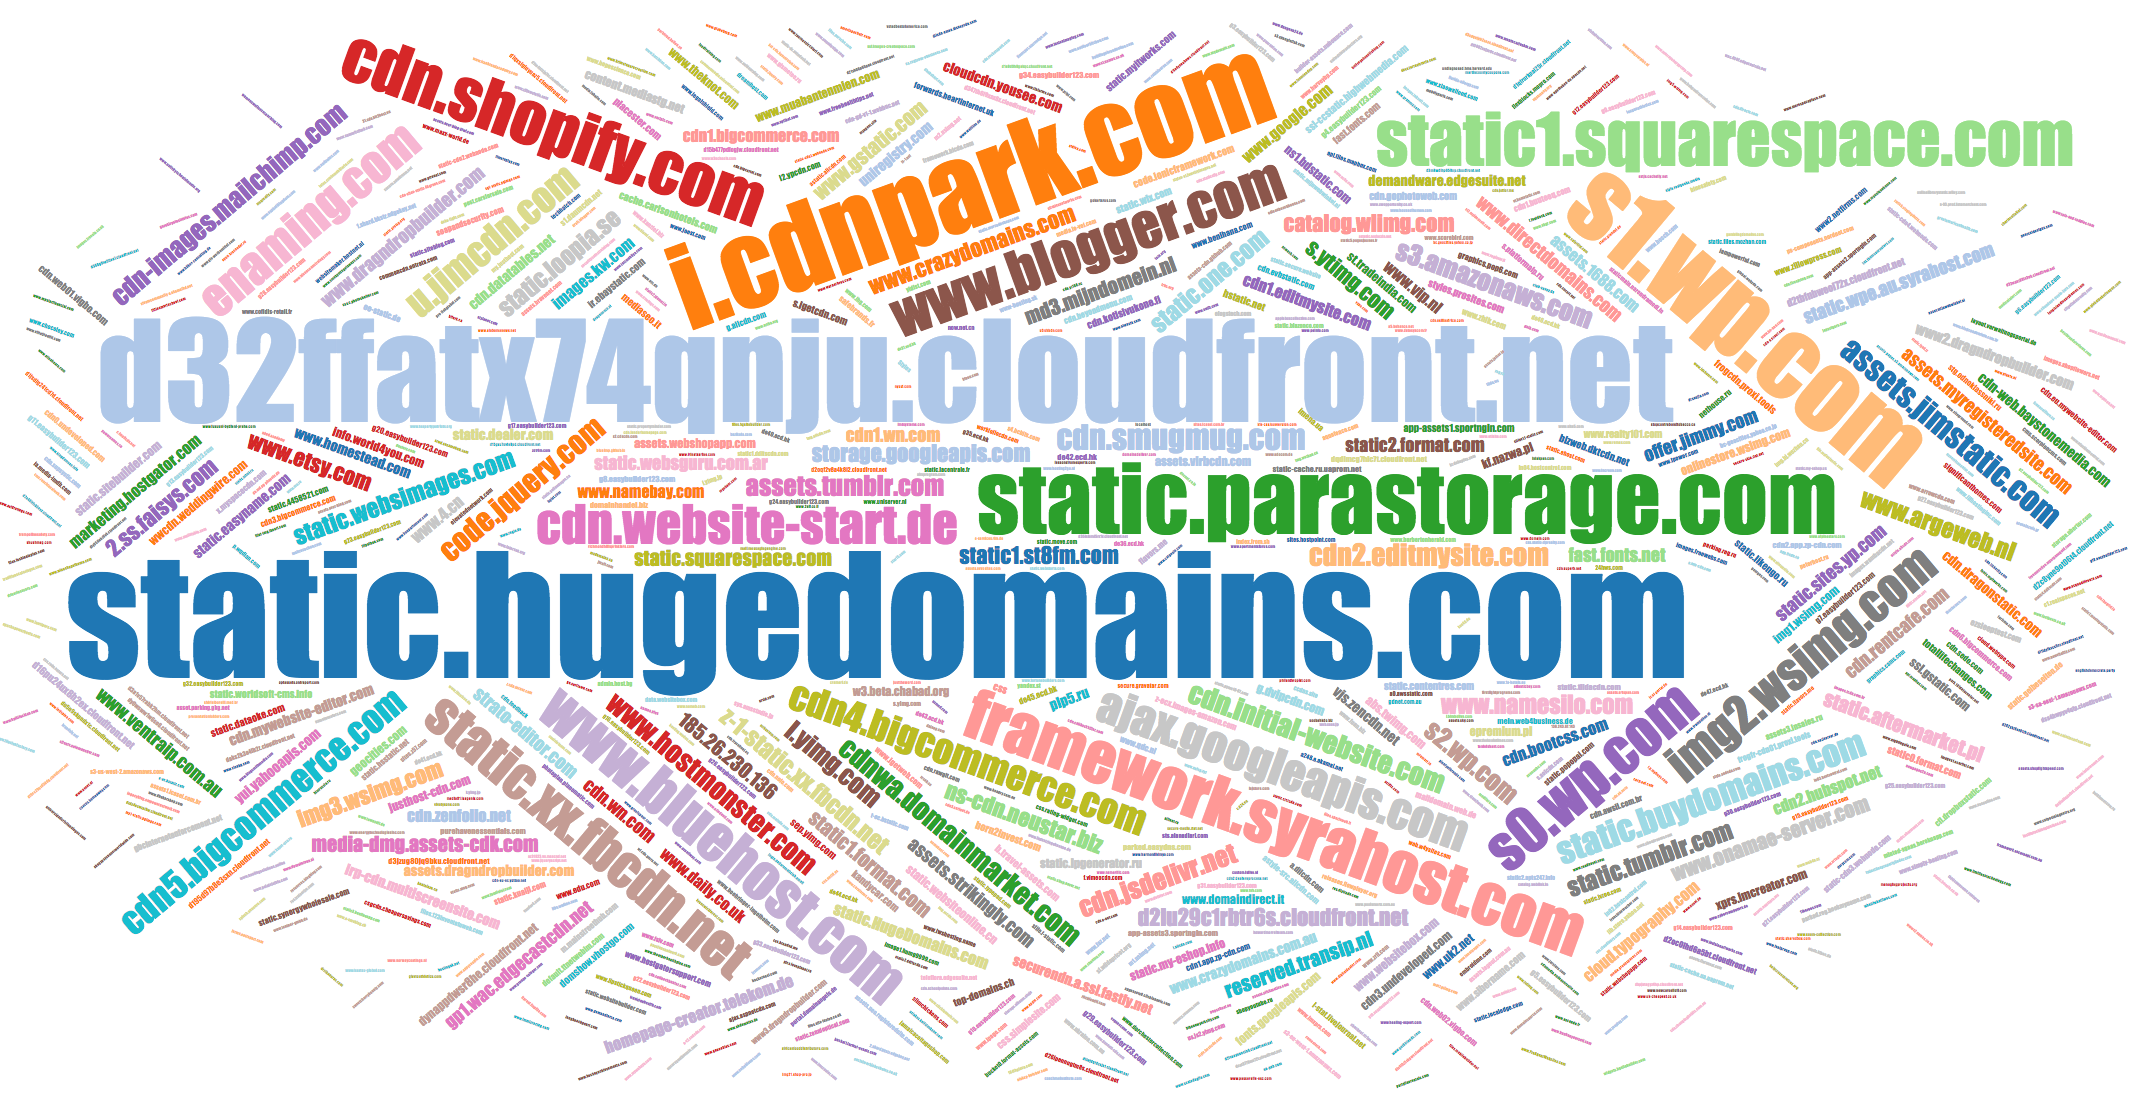 Popular names of CSS domains kf.nazwa.pl, ksiegarnia.conrad24.pl, etc.